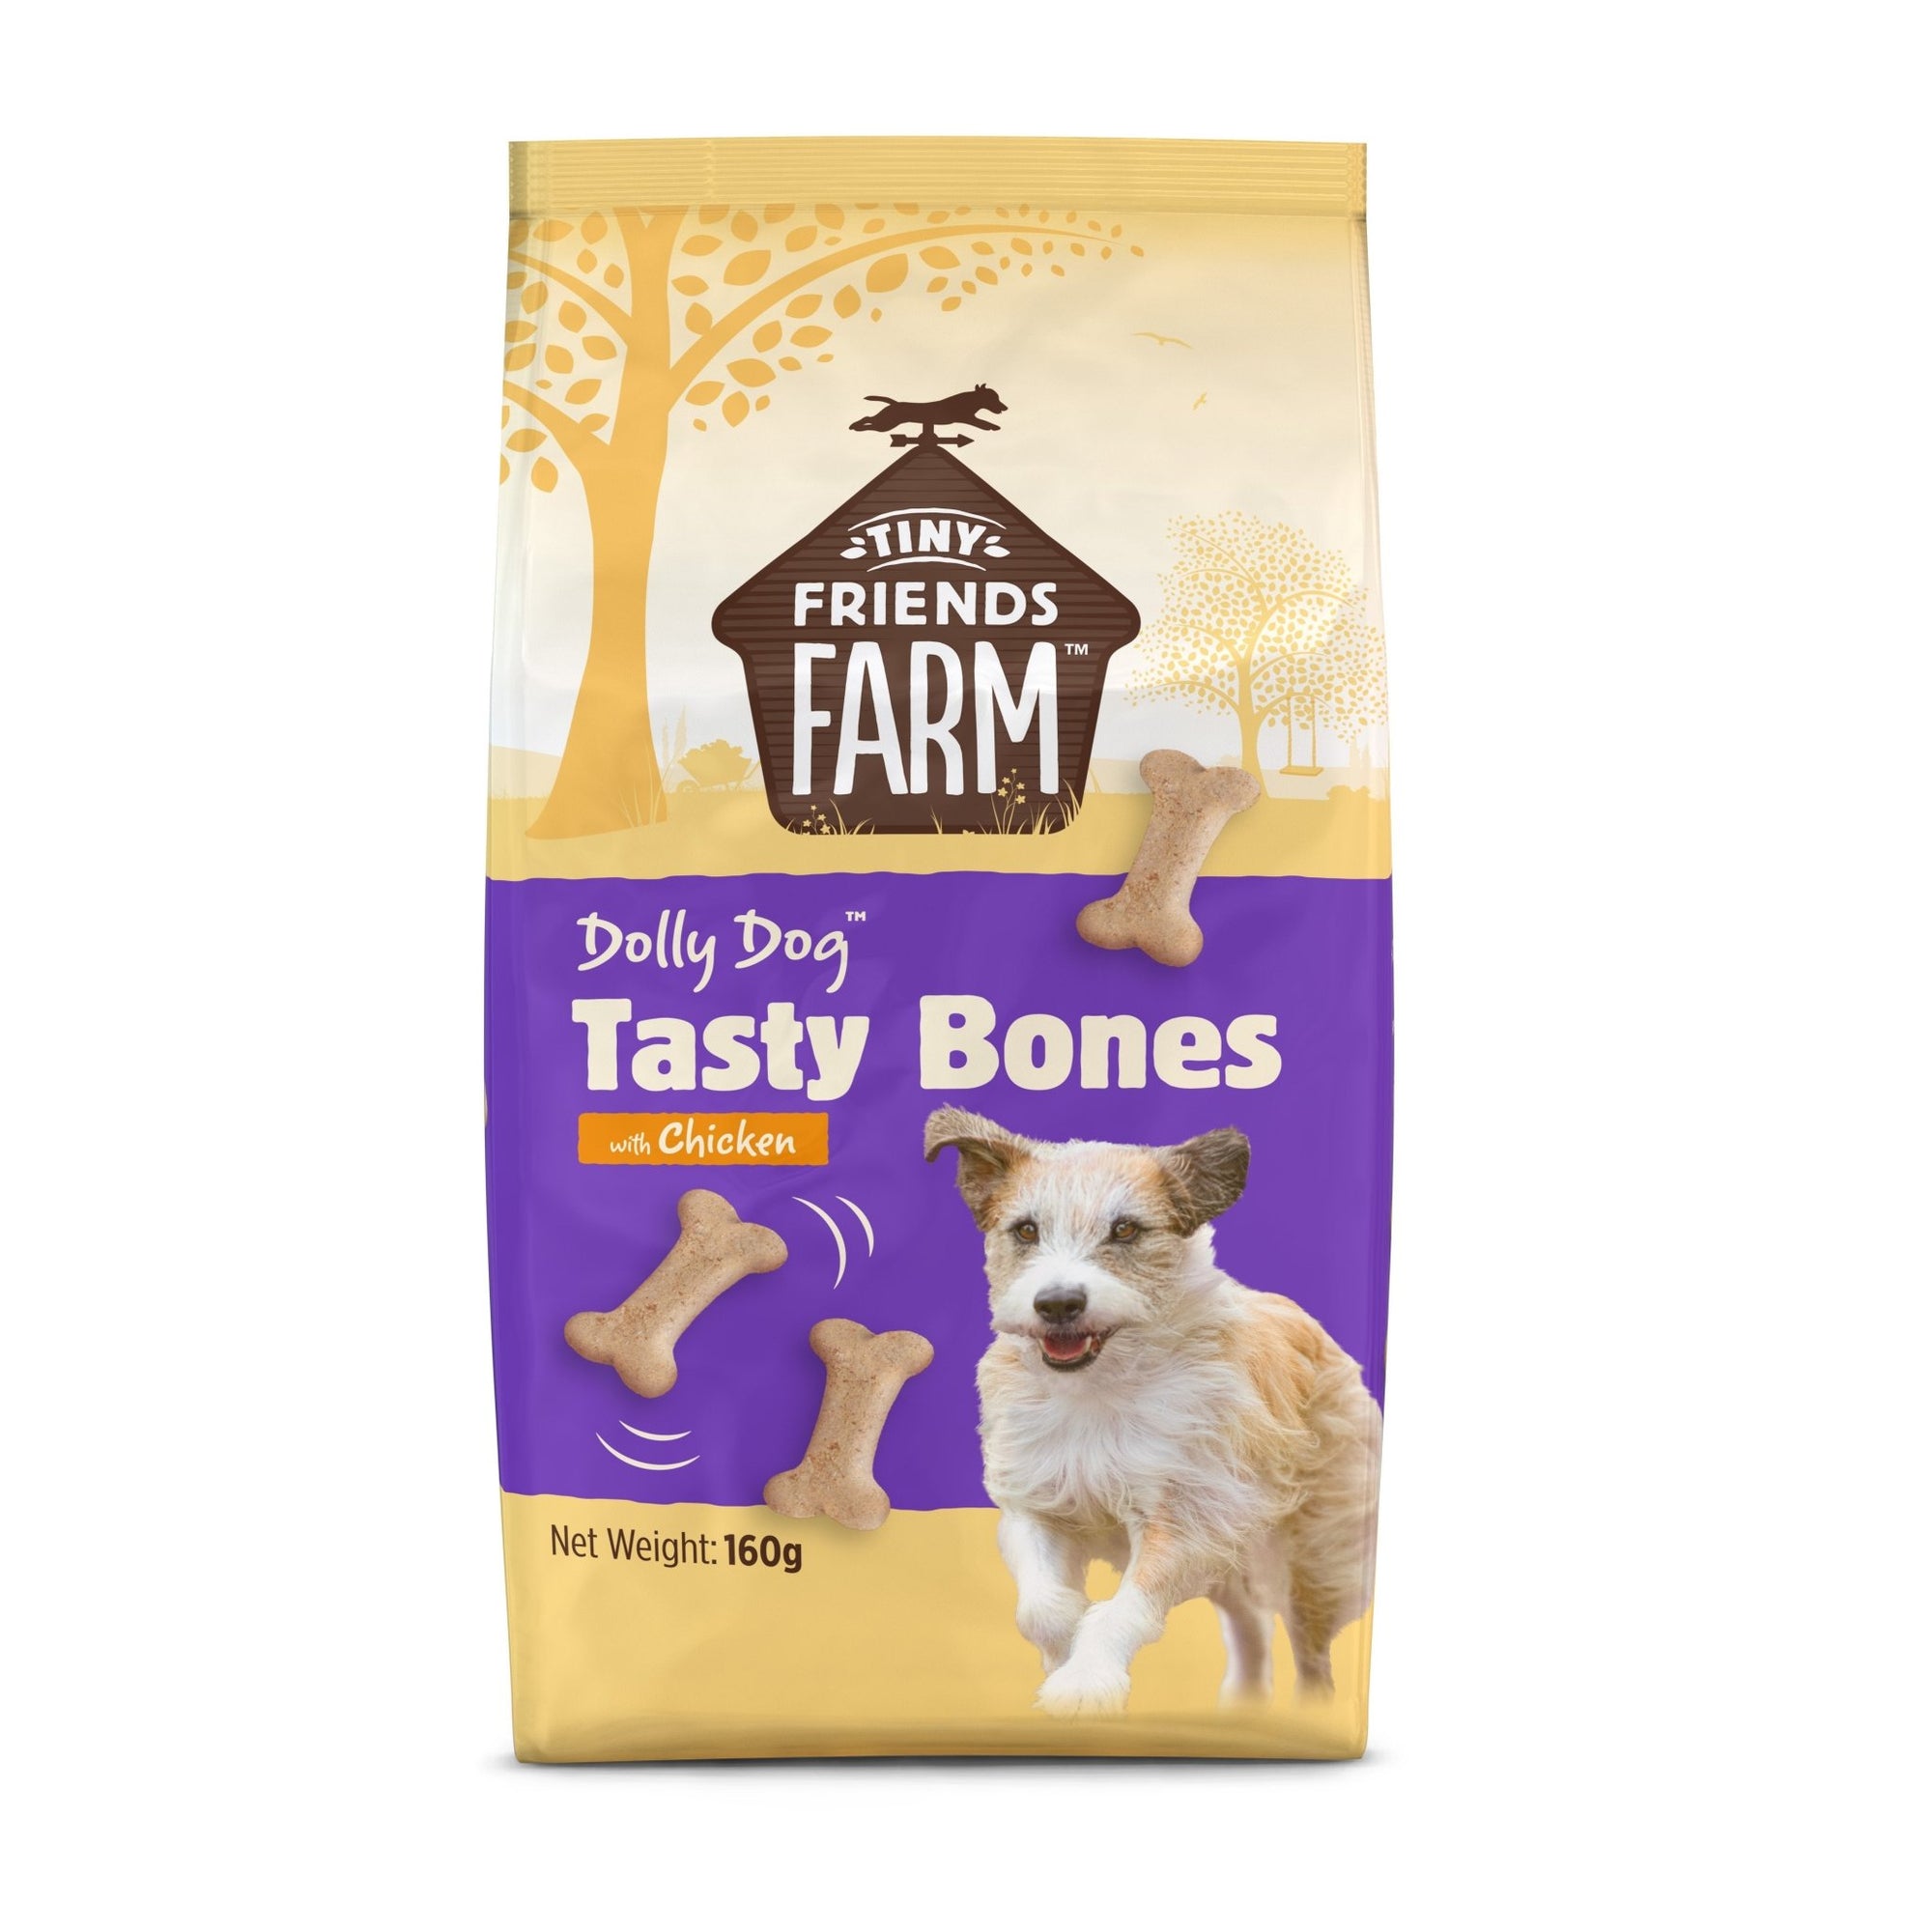 Tiny Friends Farm Dolly Dog Tasty Bones with Chicken Dog Treats 6x160g, Supreme Pet Foods,